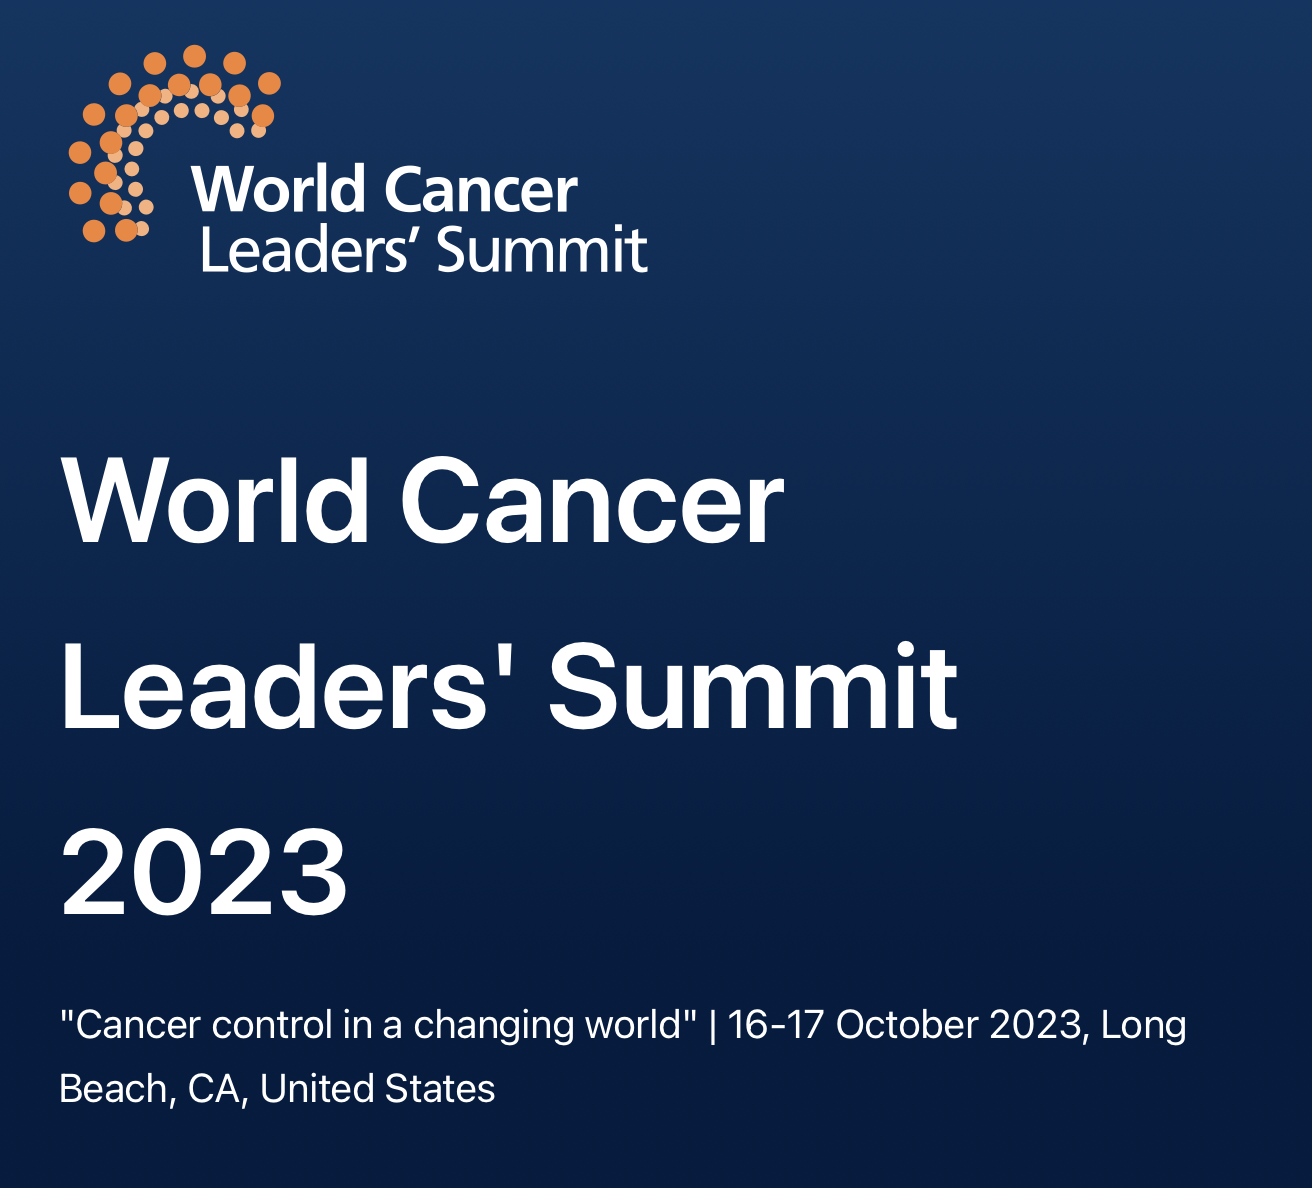 World Cancer Leaders' Summit 2023